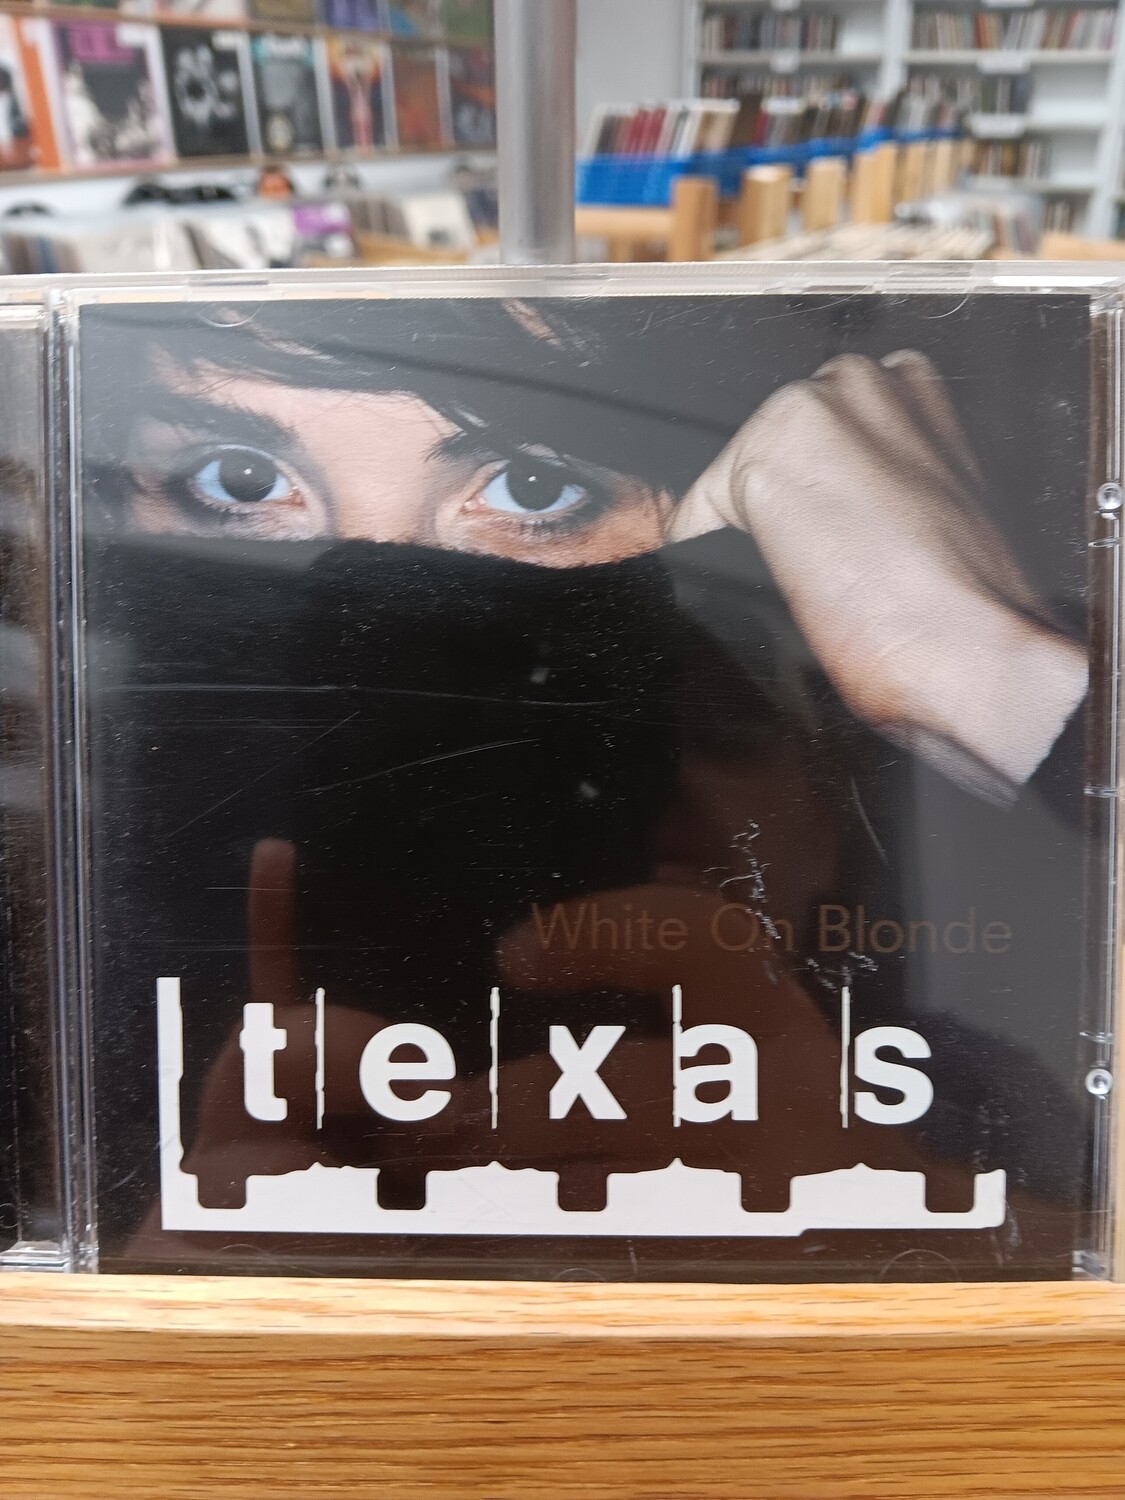 TEXAS - White on blonde (CD)